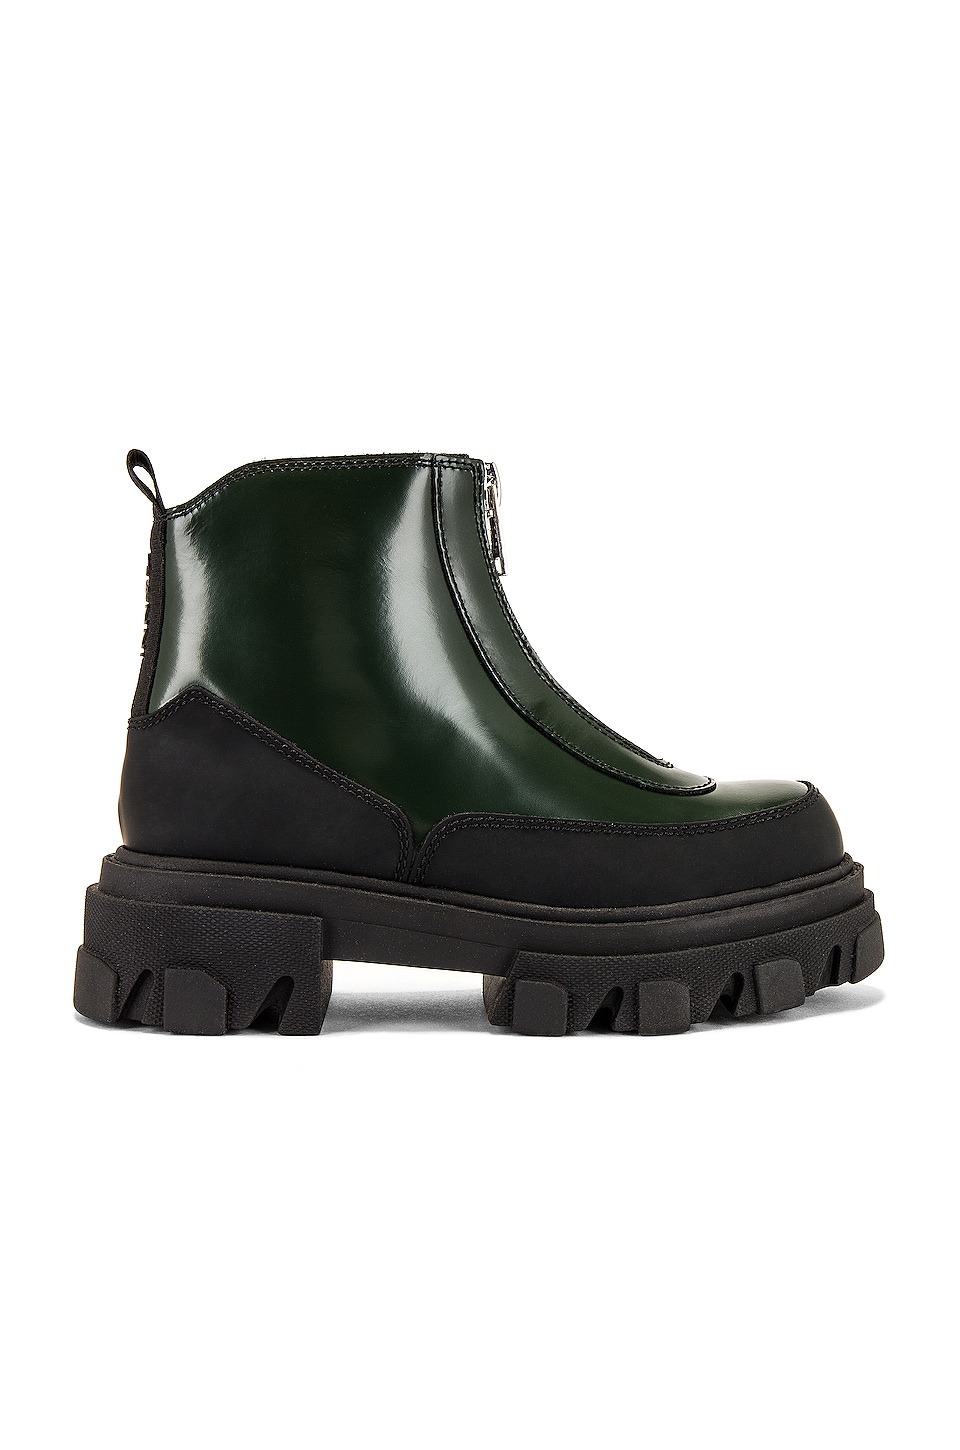 Ganni Zipper Boot in Dark Green | REVOLVE